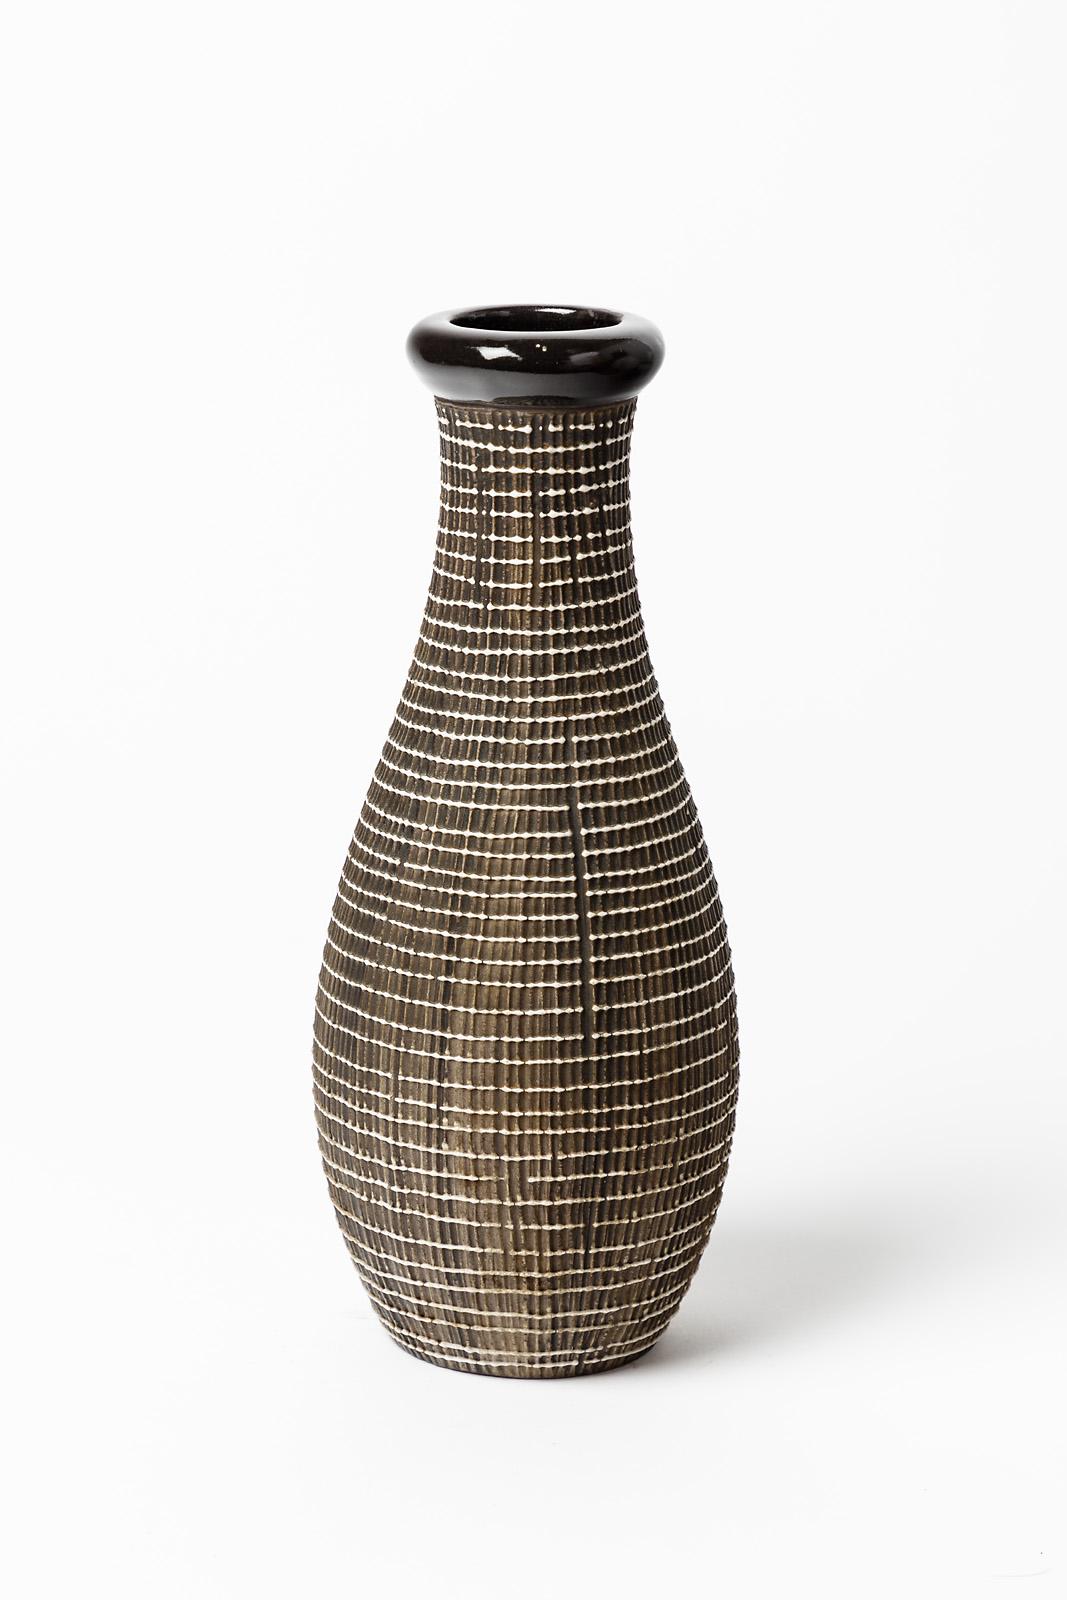 French Black and White Xxth Century Art Deco Ceramic Vase by Lucien Brisdoux, 1940